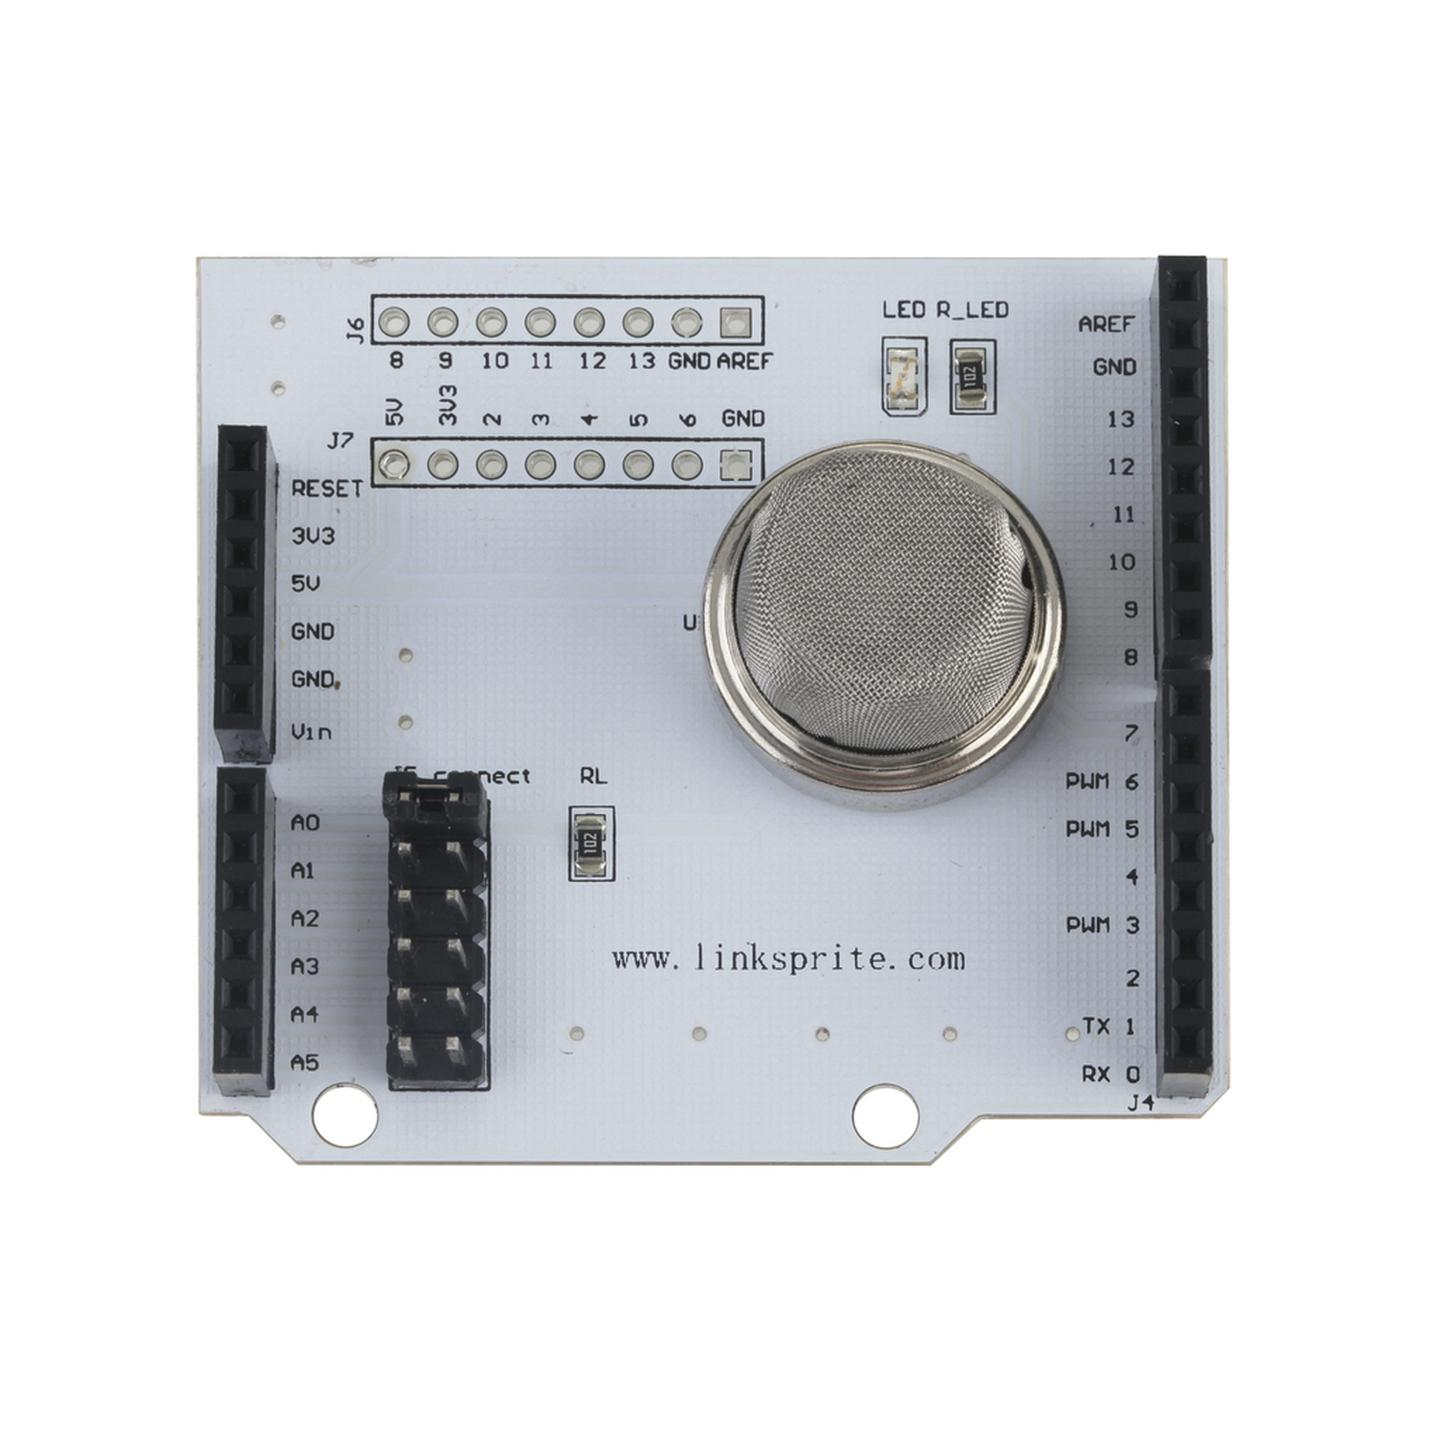 MQ2 Smoke Detector Shield for Arduino